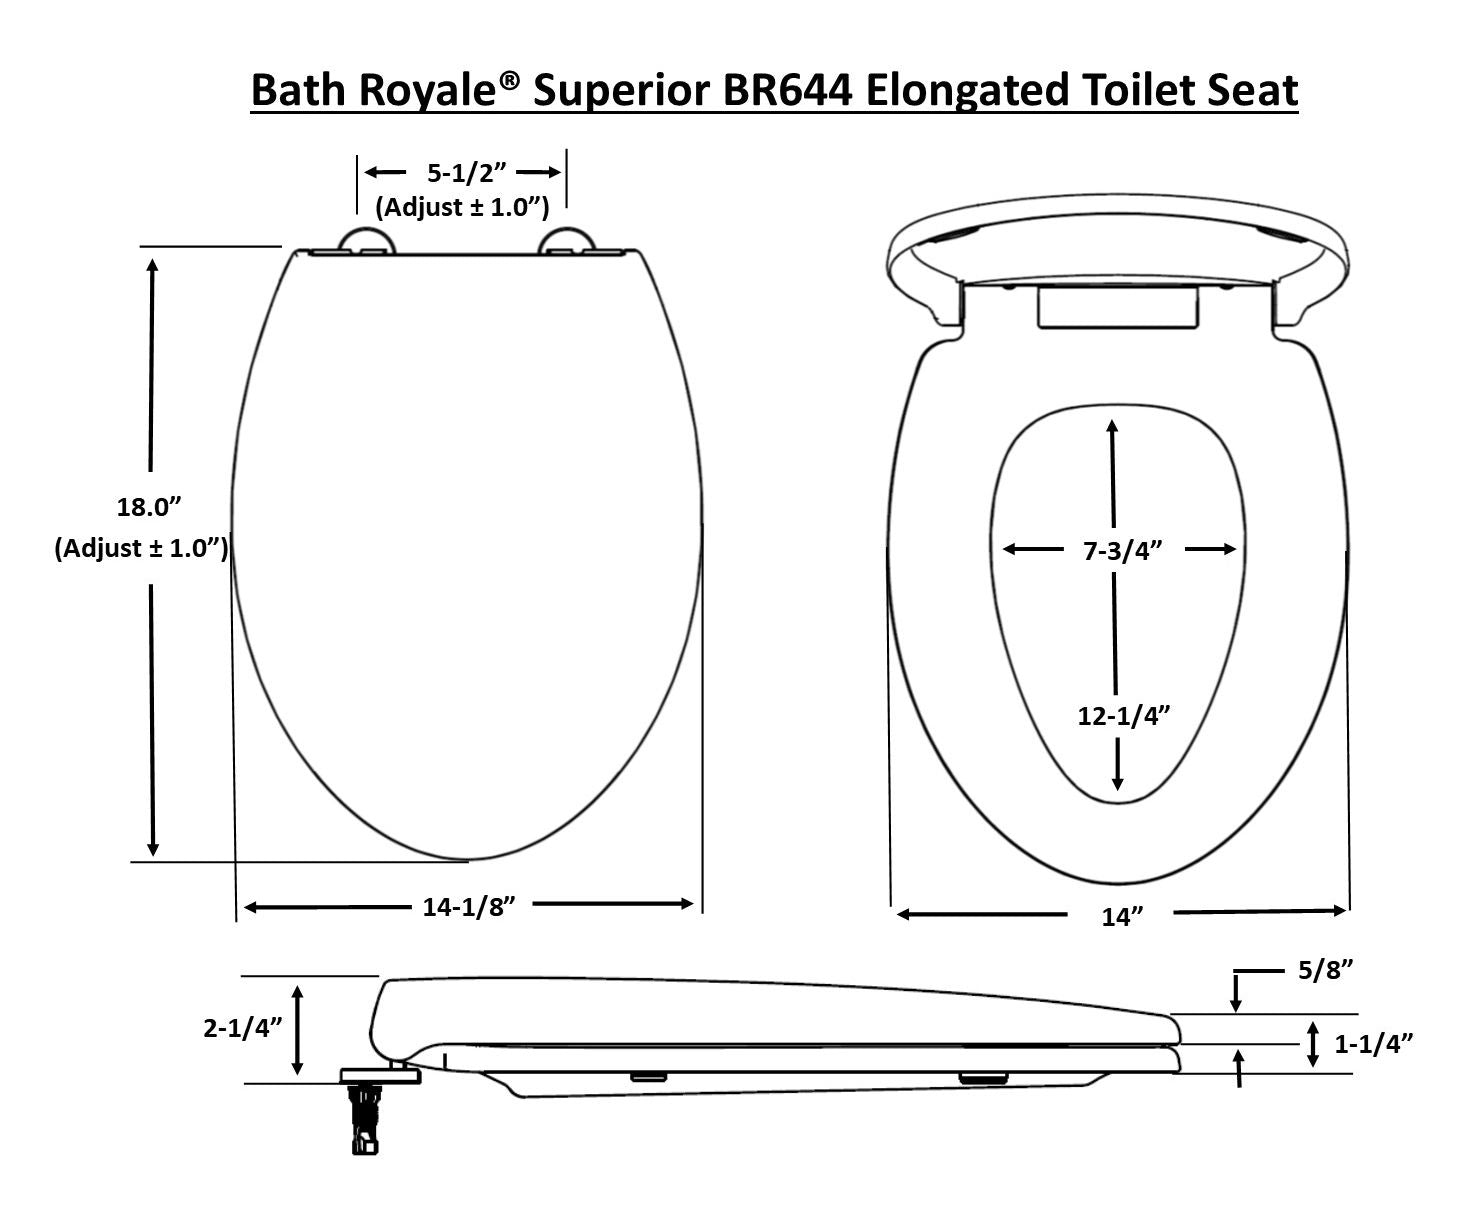 Toilet Seats by Bath Royale - Superior Elongated Toilet Seat